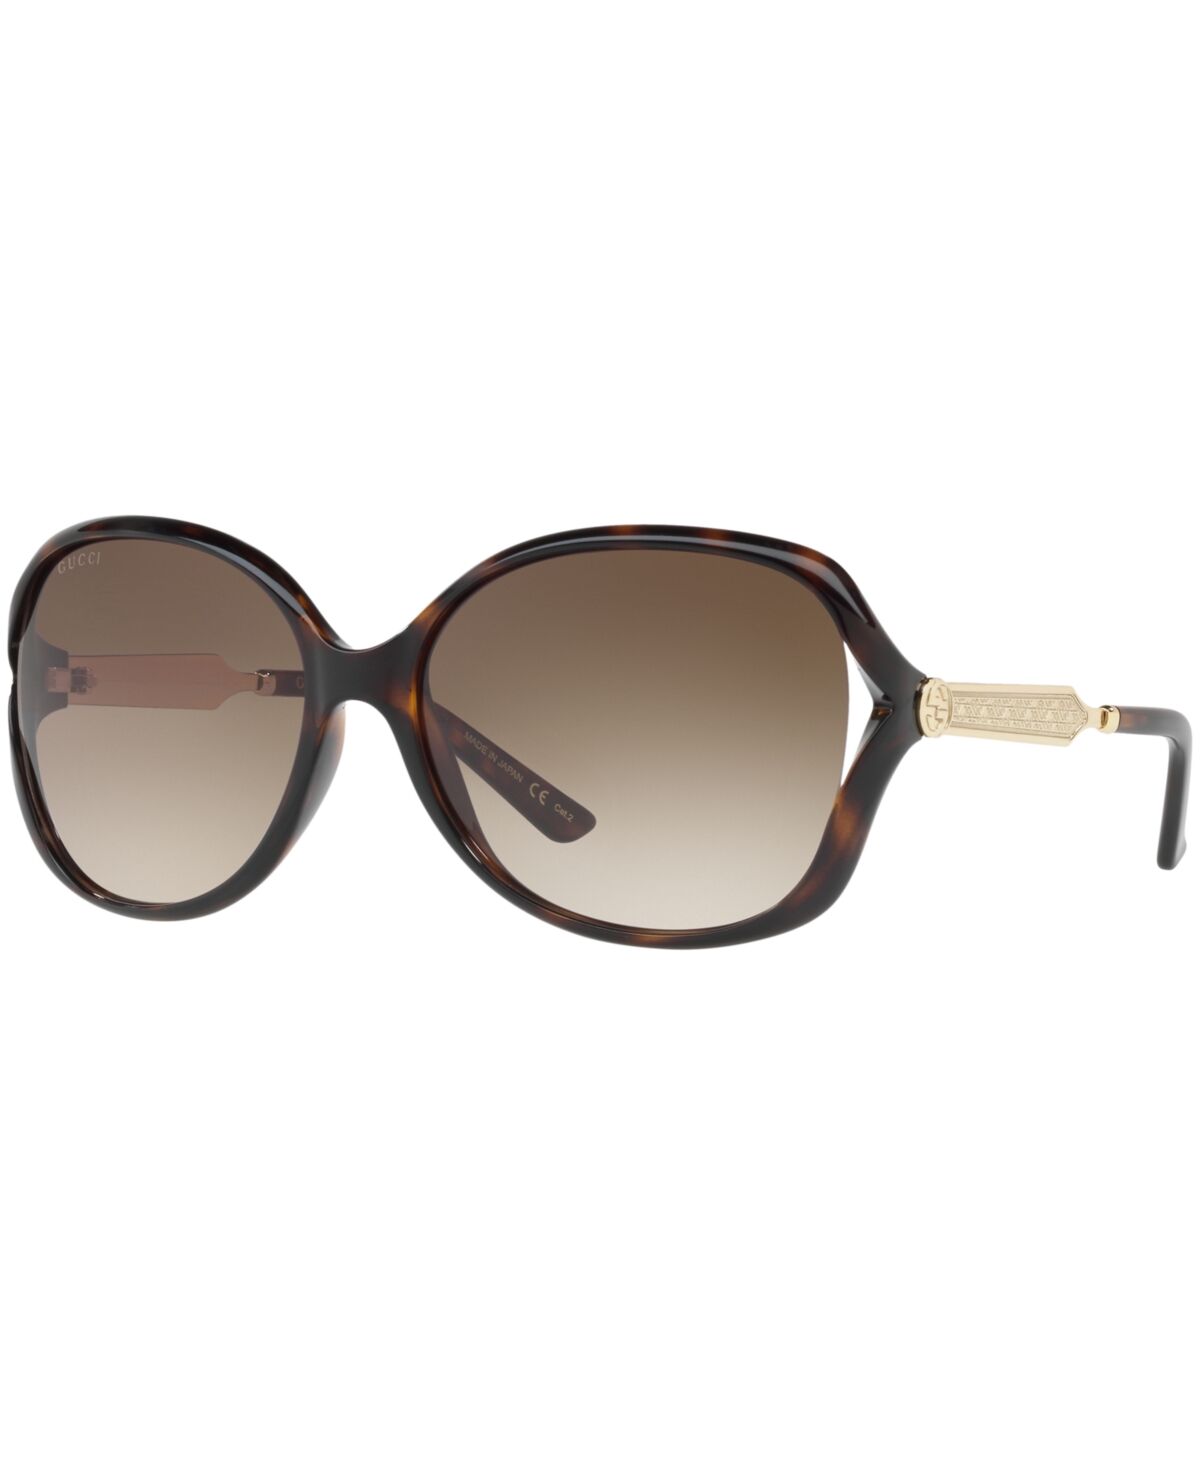 Gucci Sunglasses, GG0076S - TORTOISE/BROWN GRADIENT